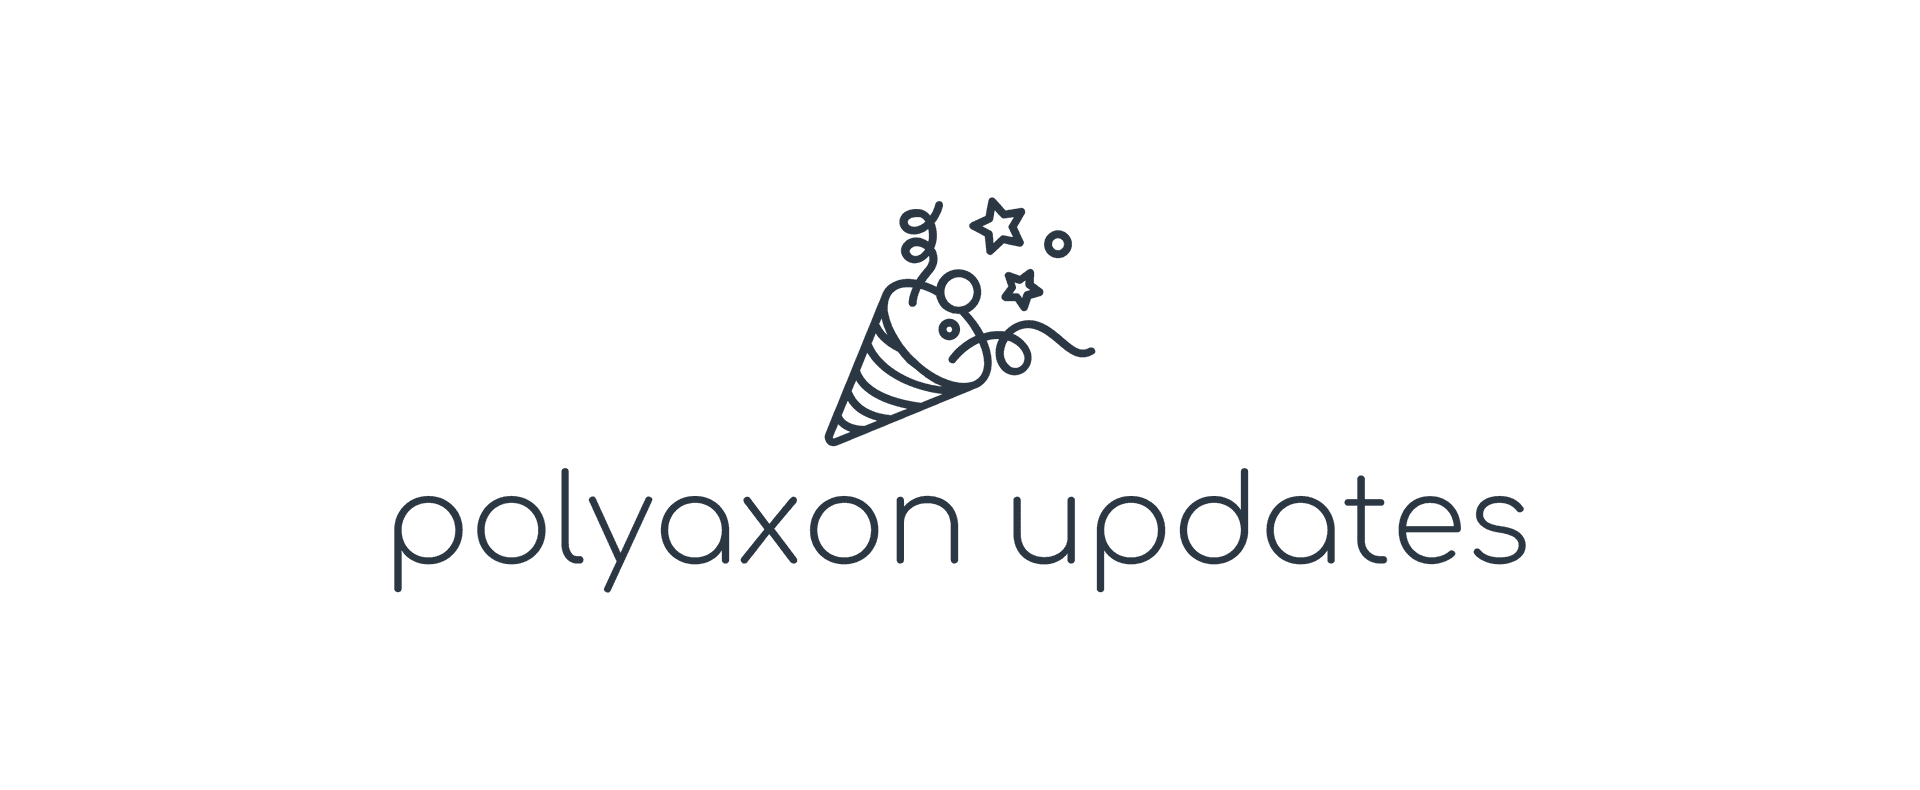 Polyaxon 0.2.7: experiments comparison & model analysis